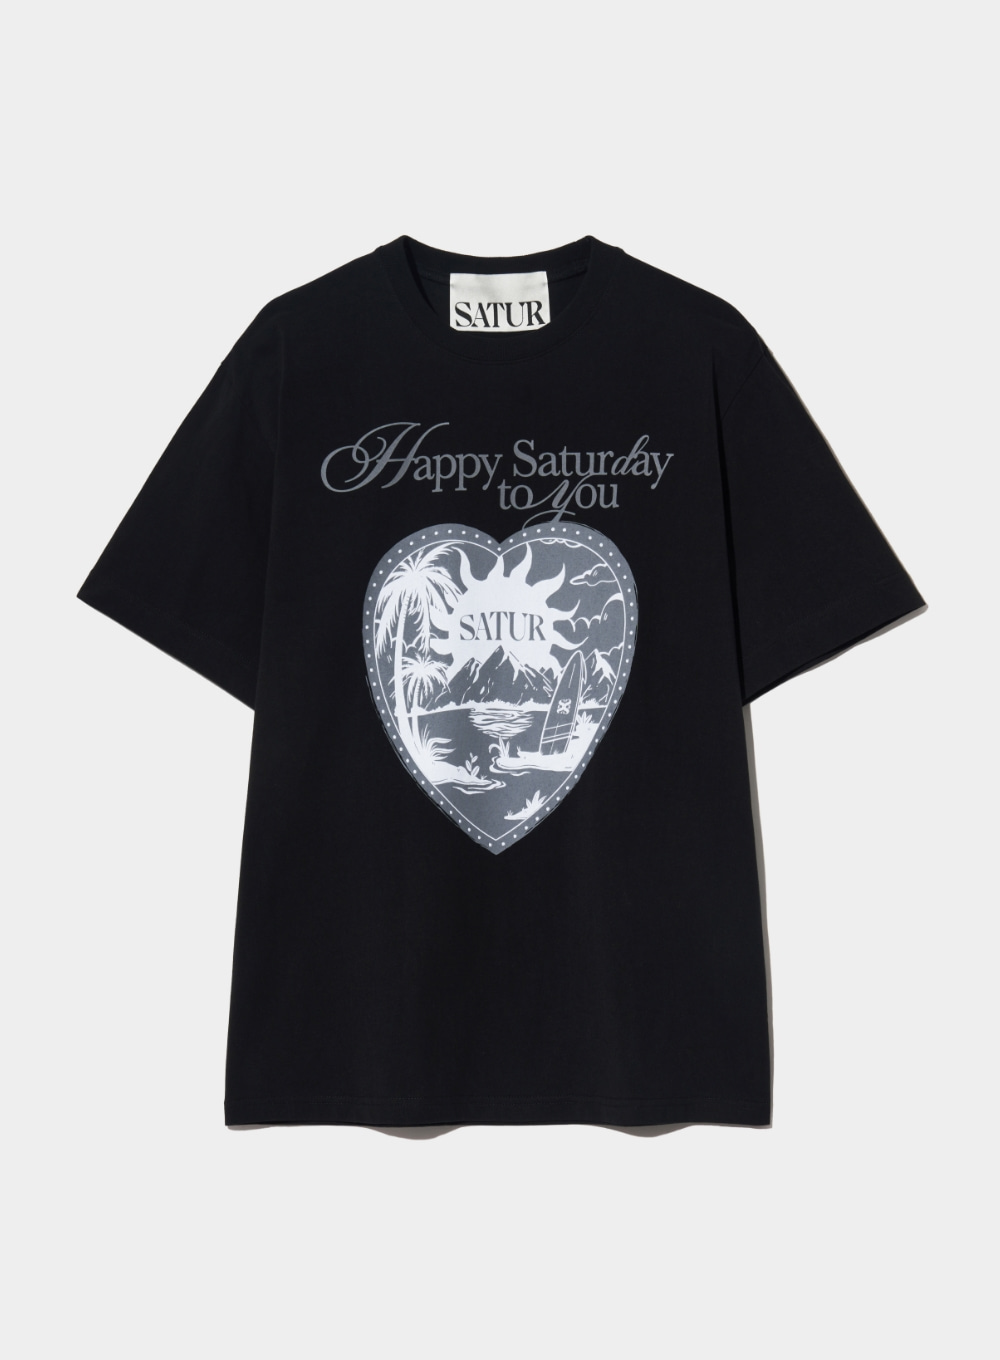 Sunrise in Heart Graphic T-Shirt - Newtro Black